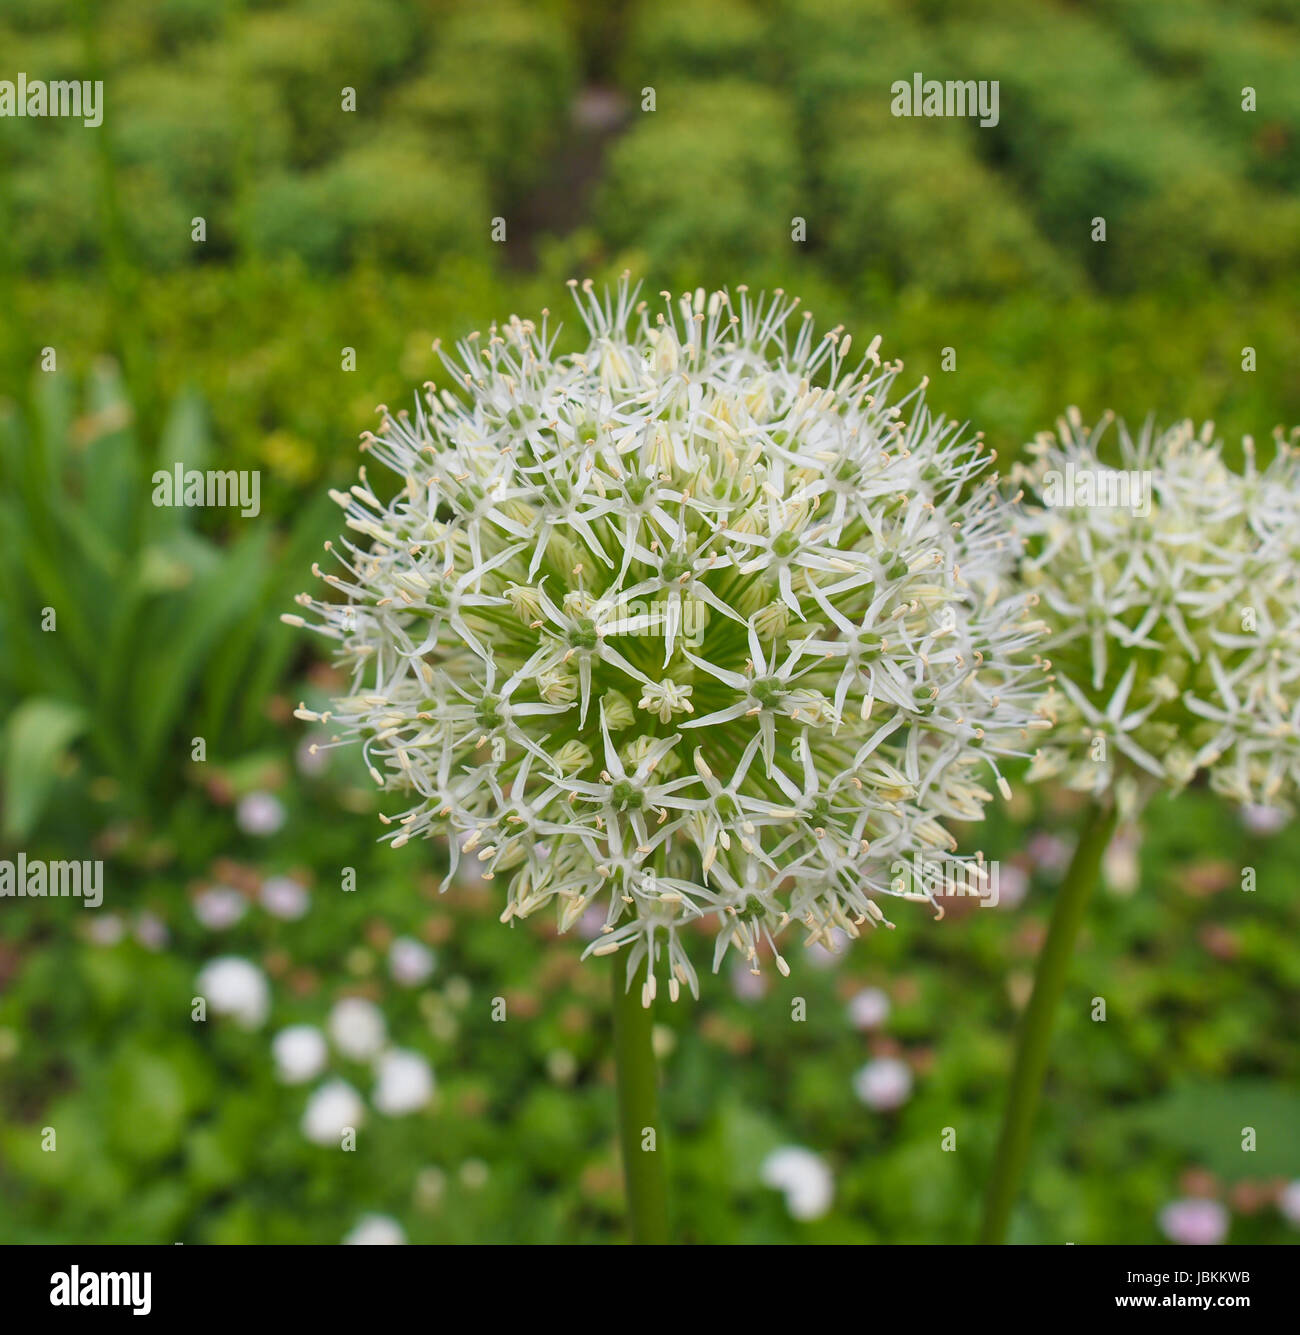 Allium Karataviense ornamental onion flowers aka Ivory Queen Stock Photo